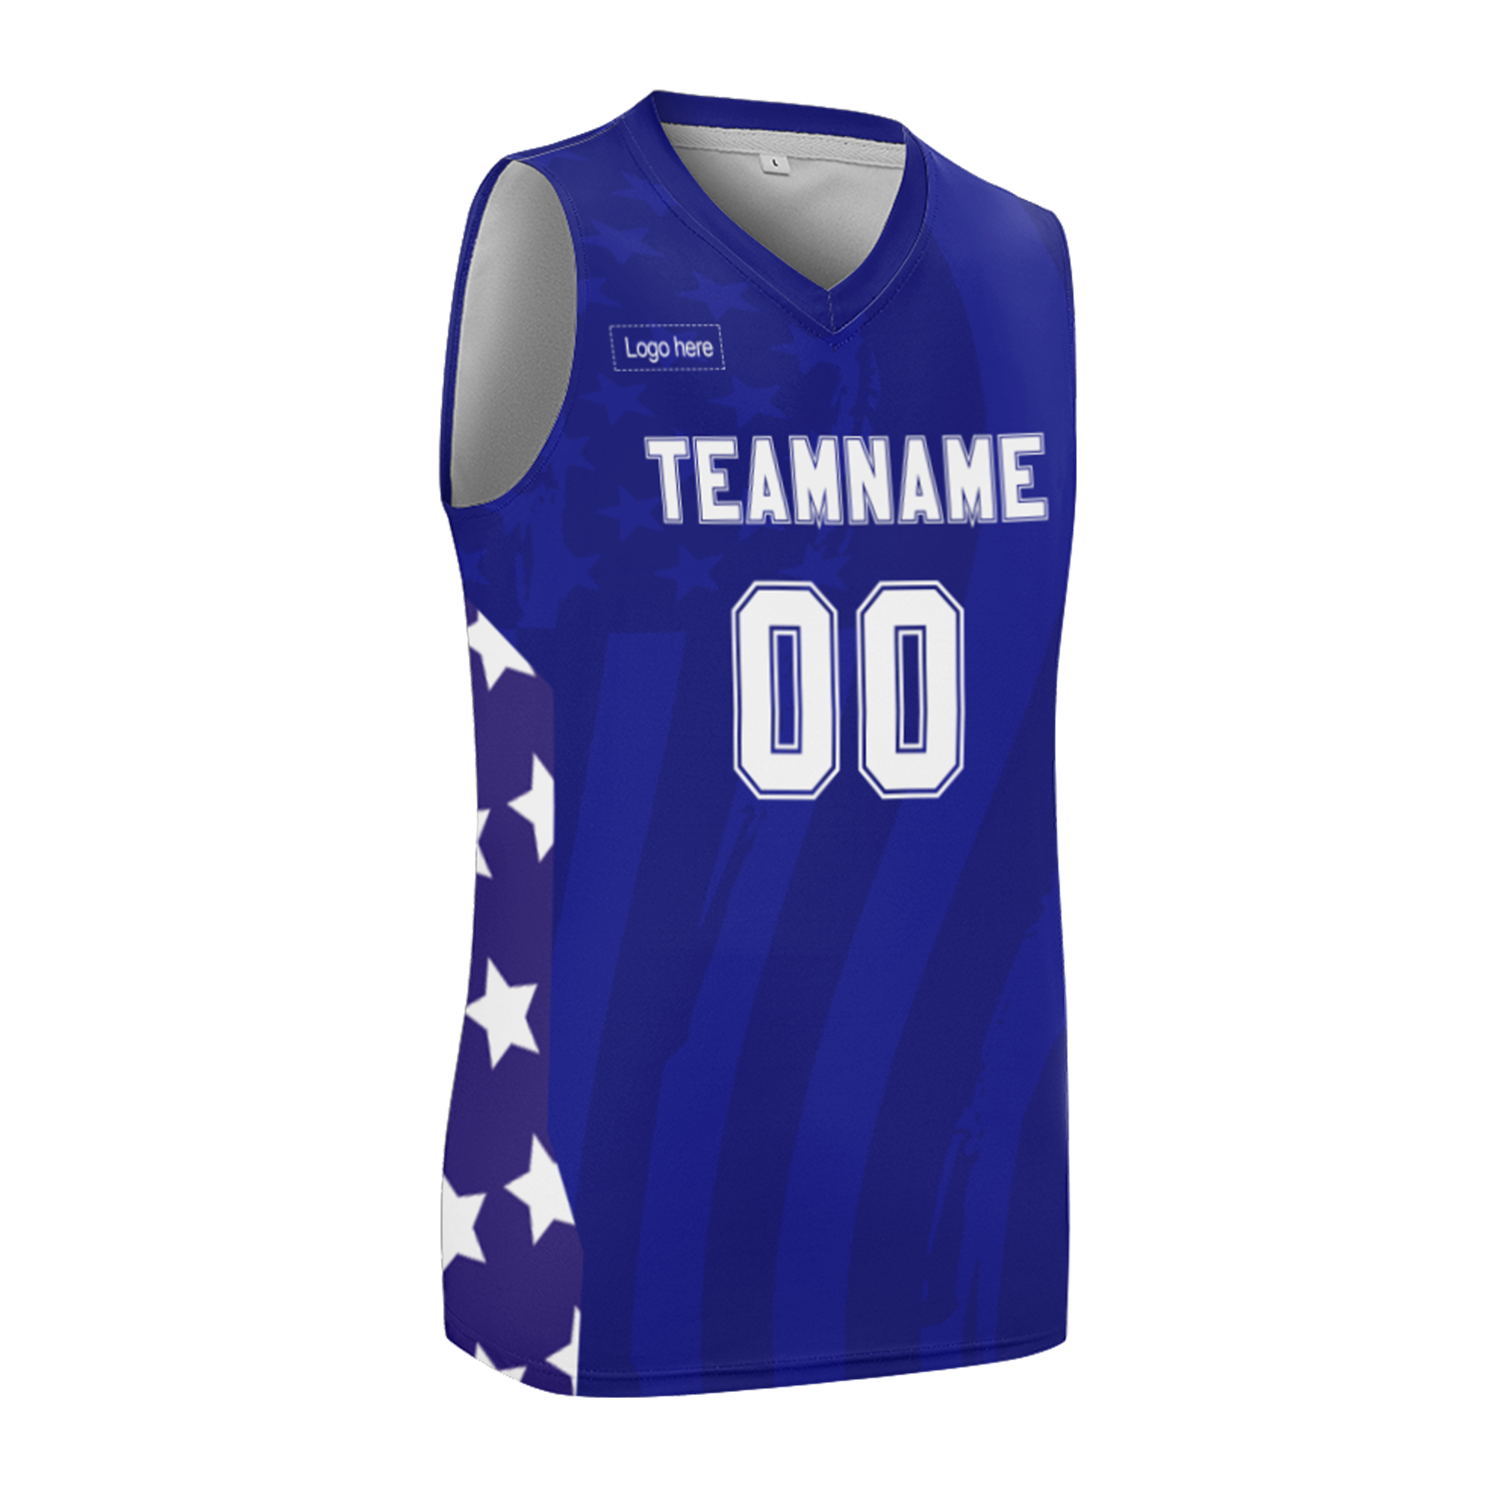 professional-basketball-wear-custom-printed-design-college-team-training-basketball-jersey-shorts-sport-basketball-uniform-suit-1